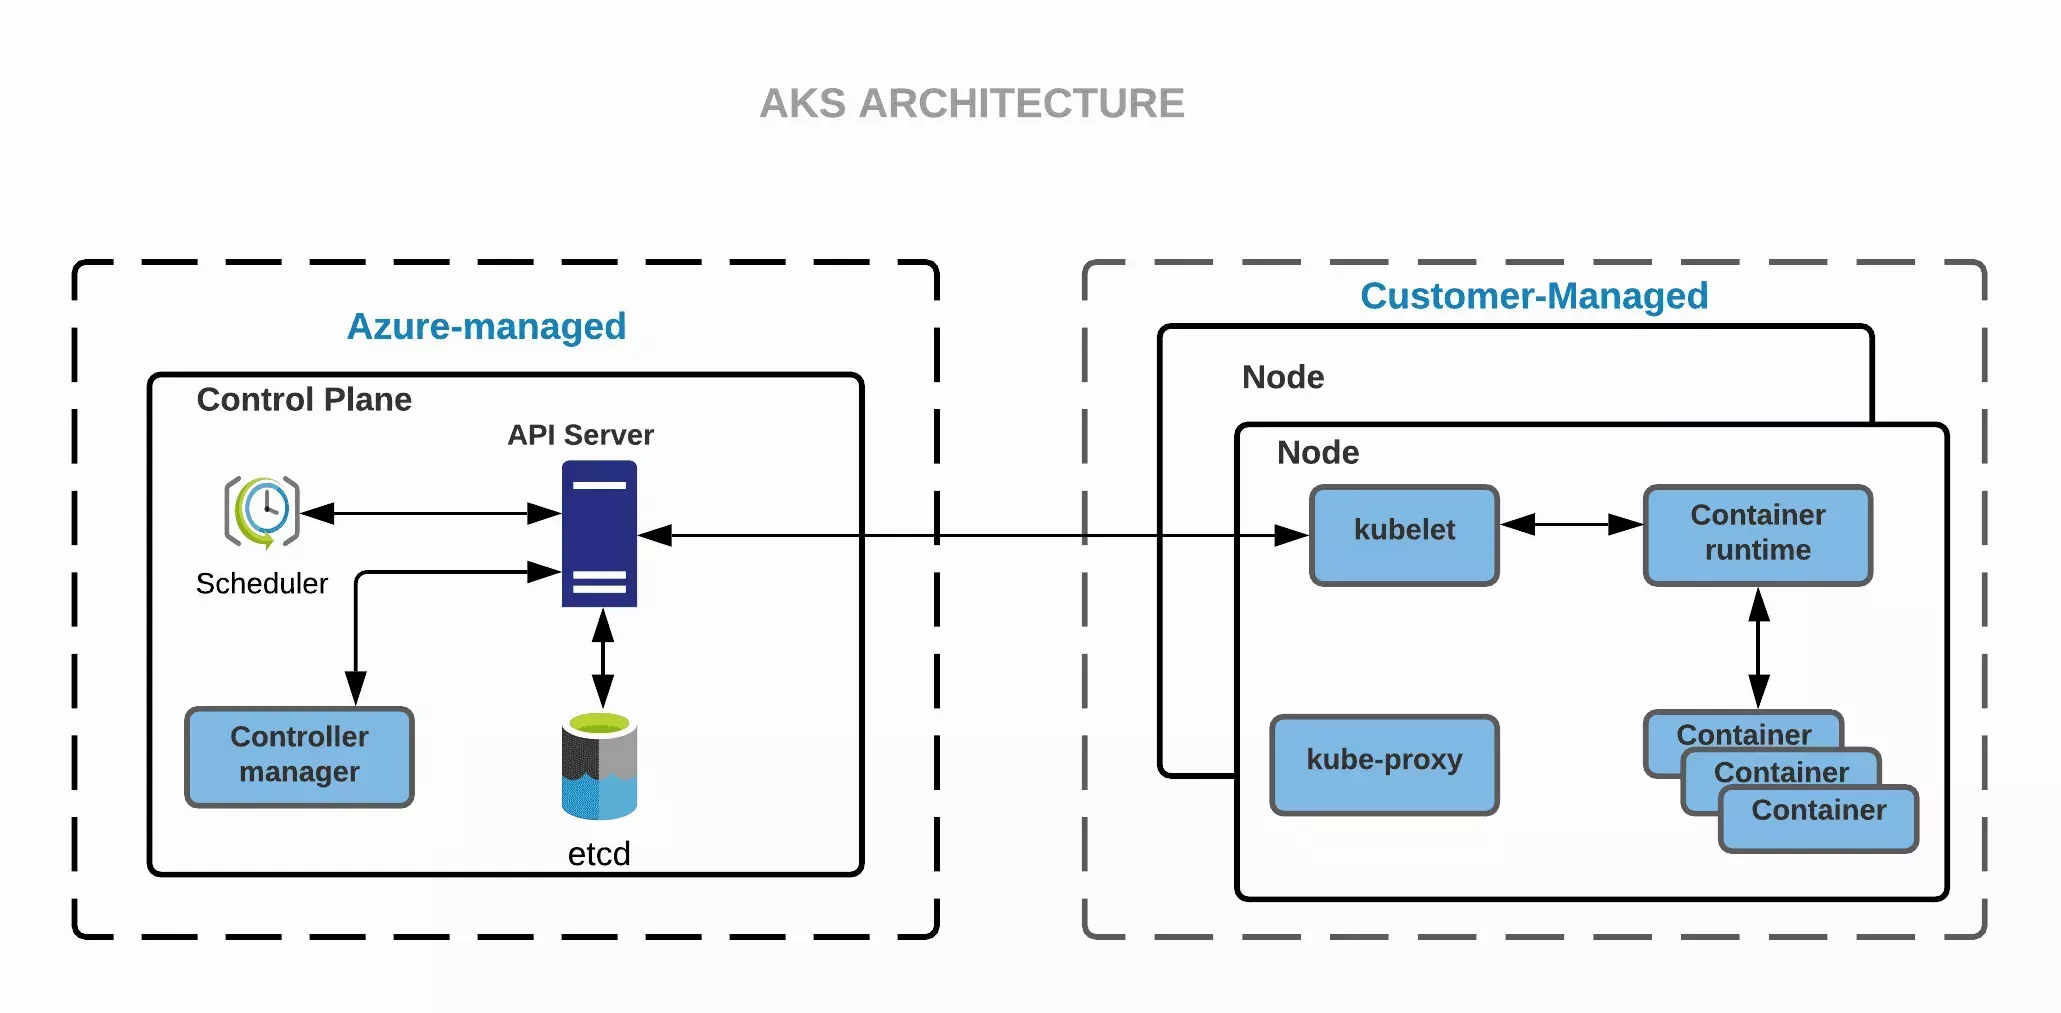 An Azure AKS architecture diagram